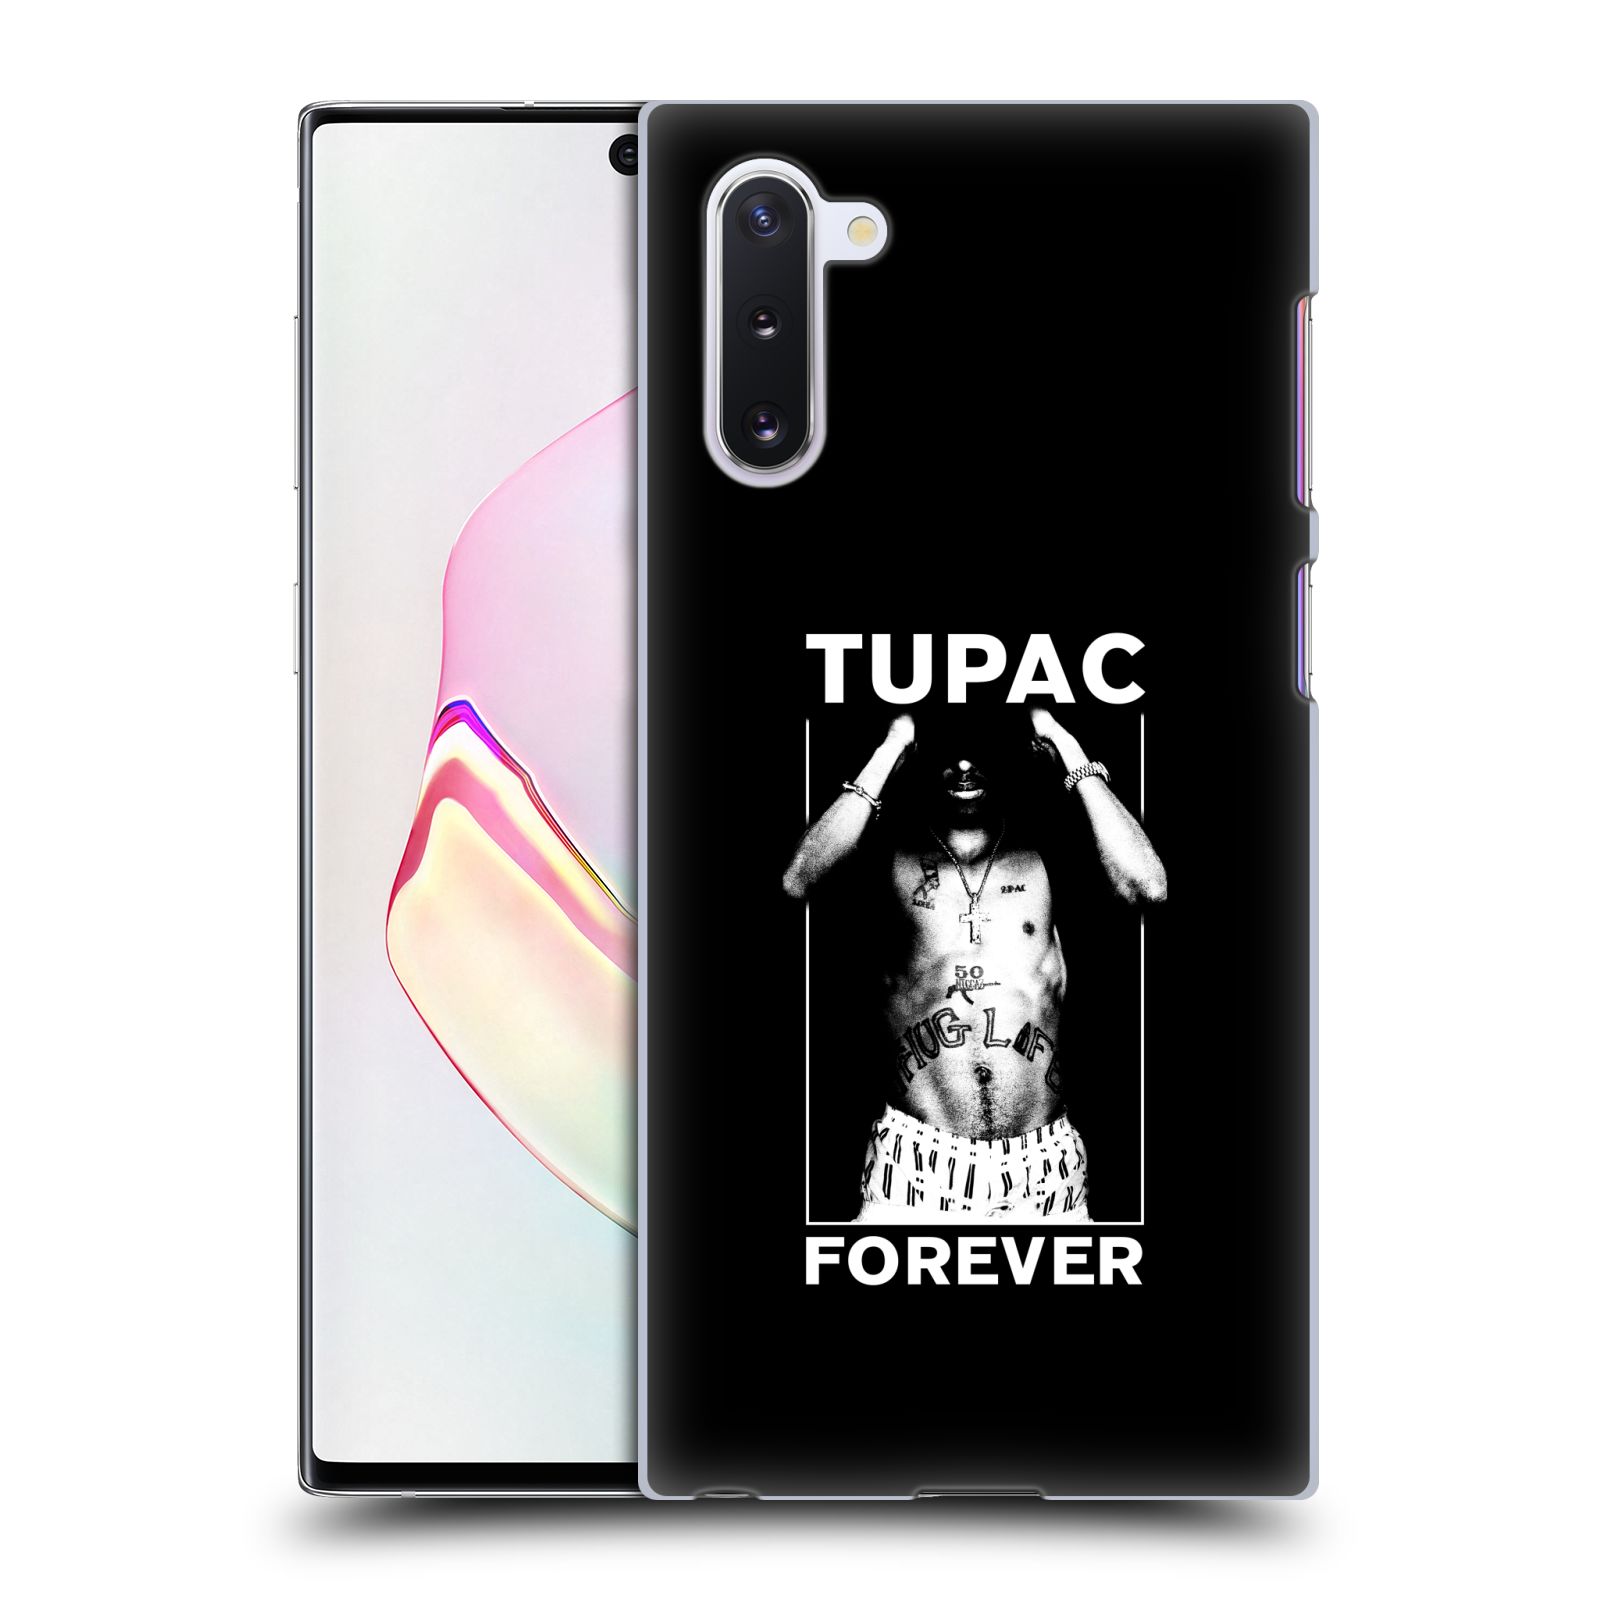 Pouzdro na mobil Samsung Galaxy Note 10 - HEAD CASE - Zpěvák rapper Tupac Shakur 2Pac bílý popisek FOREVER